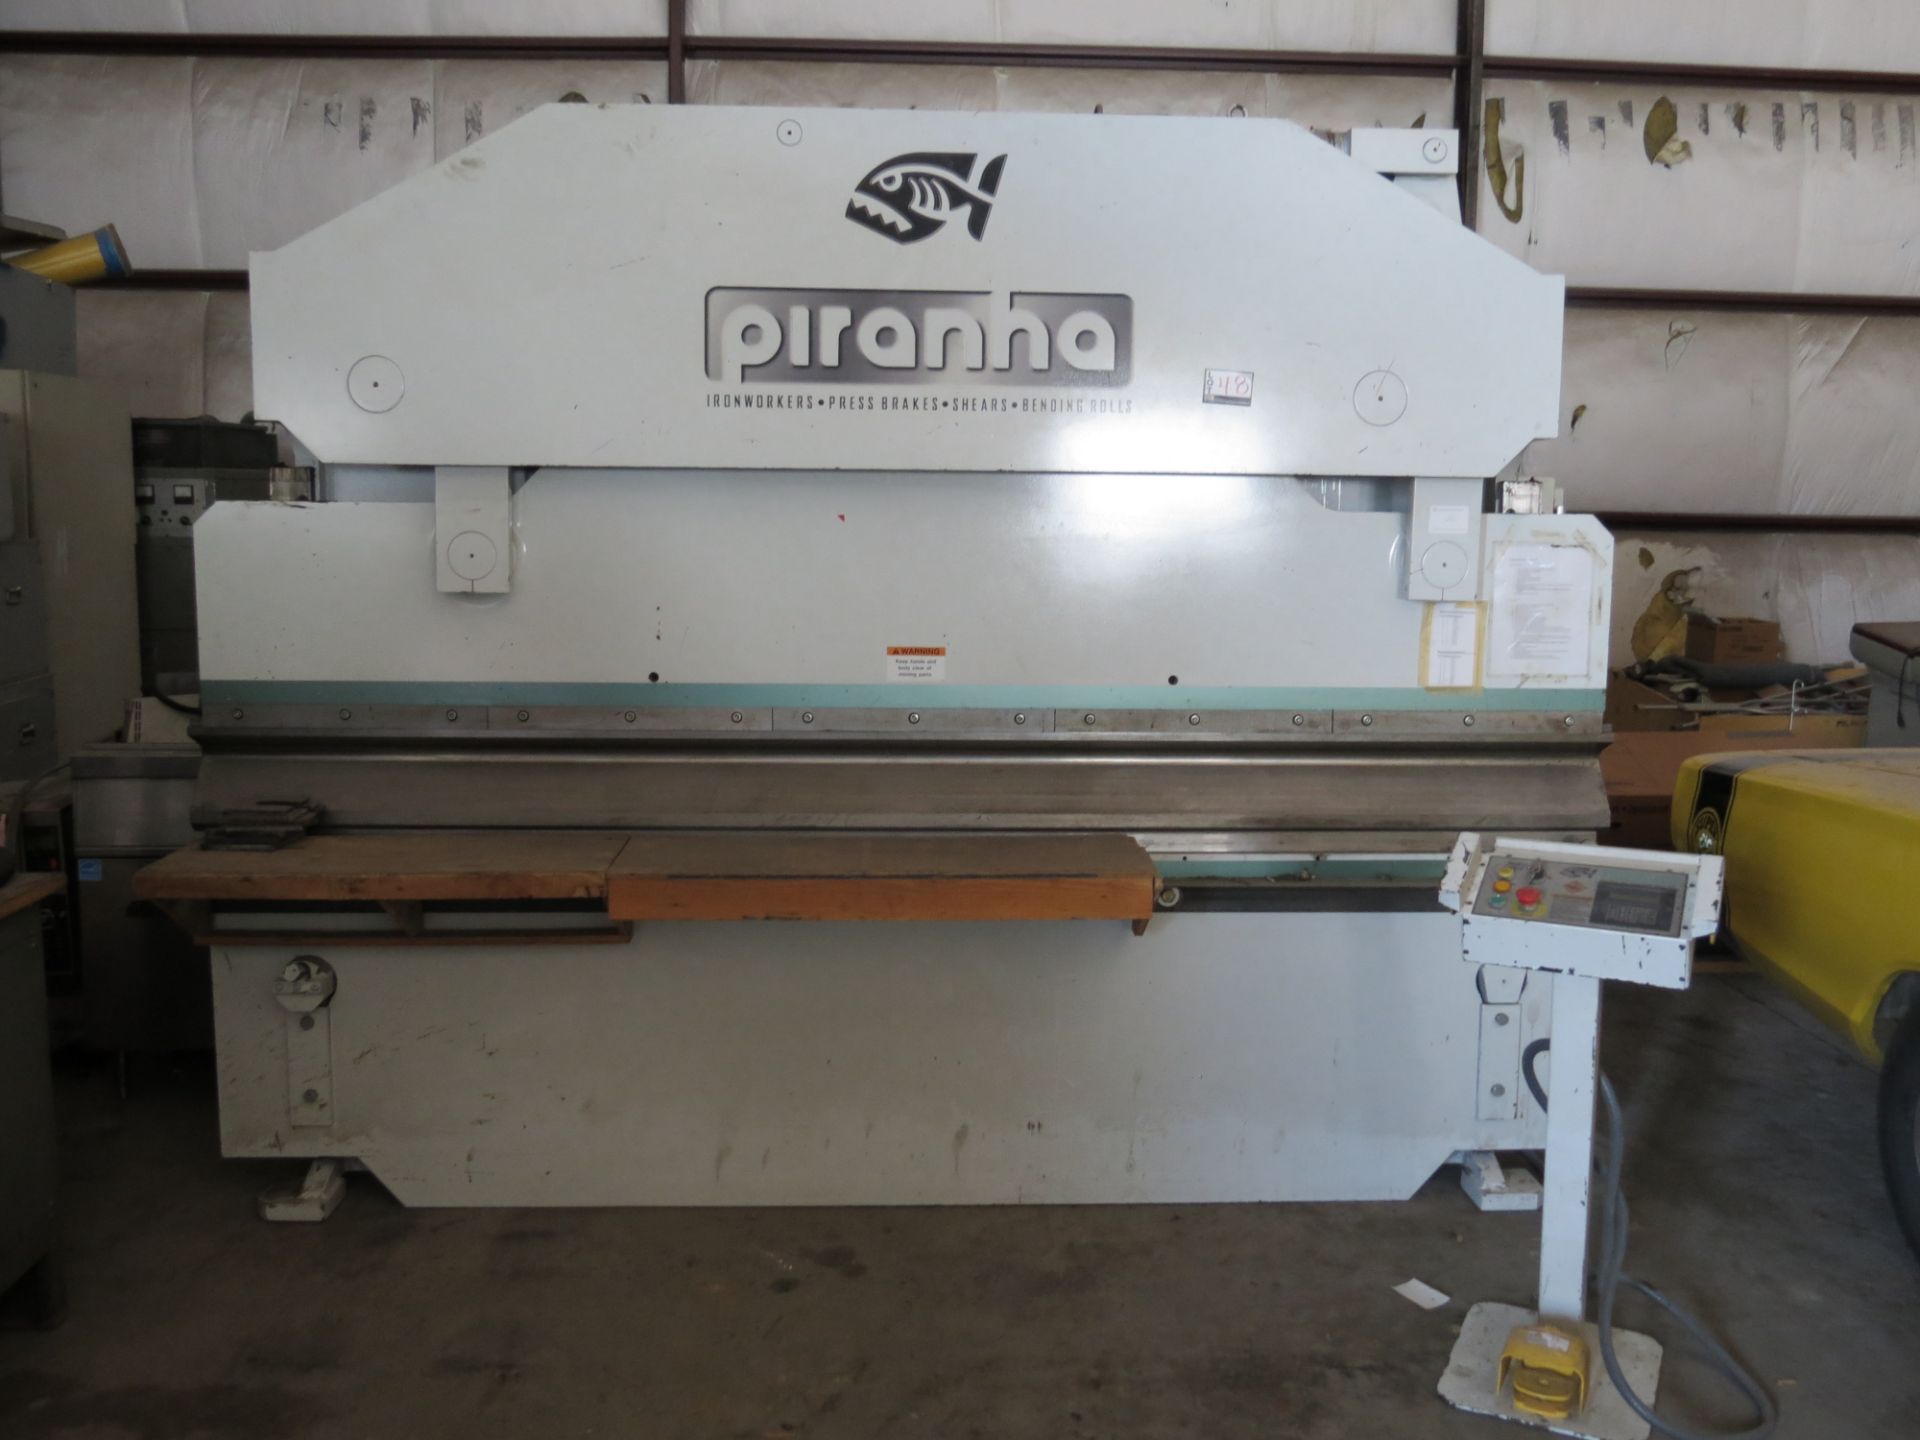 Piranha 1206 12 FT Hydraulic Press Brake, W/ Piranha Genarations-2 Controls, Back Gages, s/n 9510 - Image 8 of 8